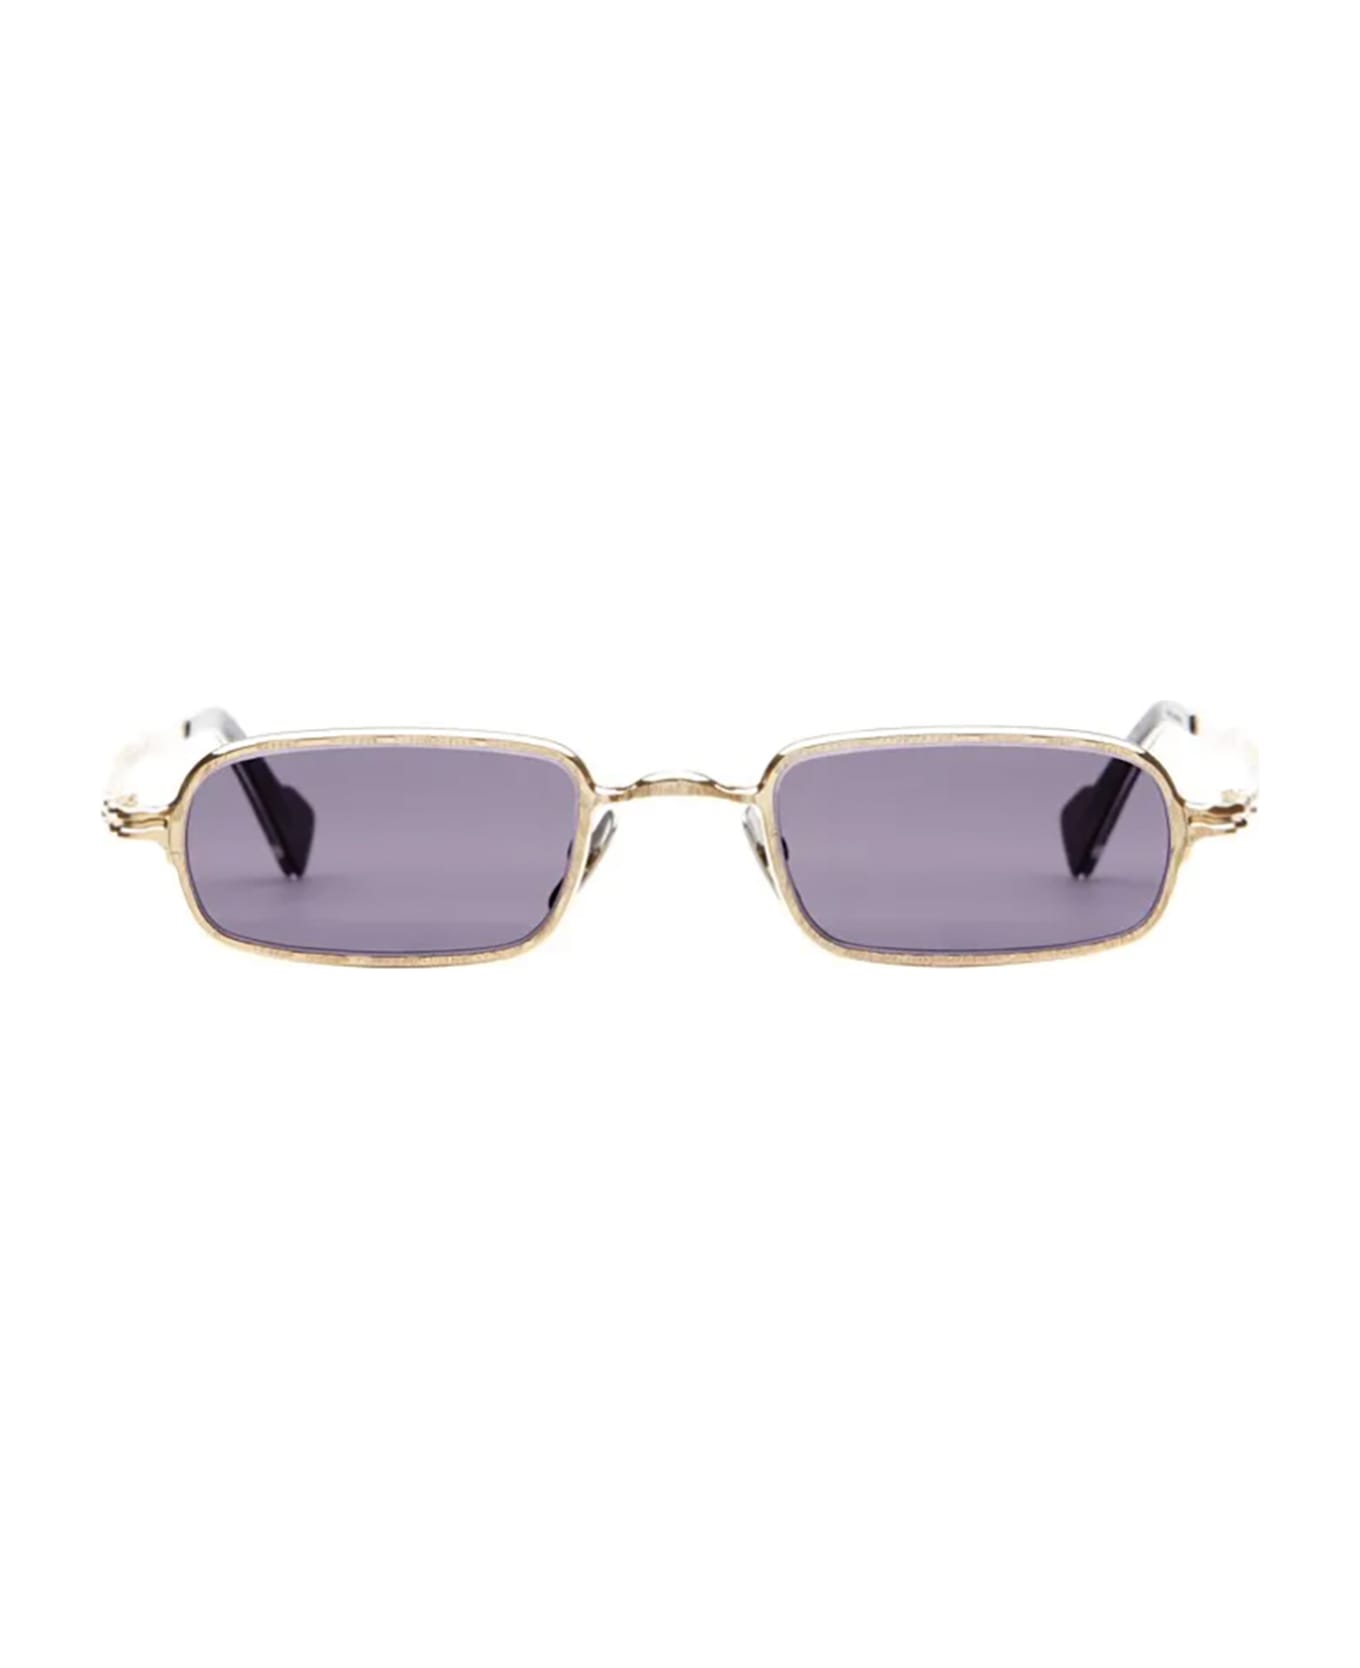 Kuboraum Z18 Sunglasses - Gg Violet